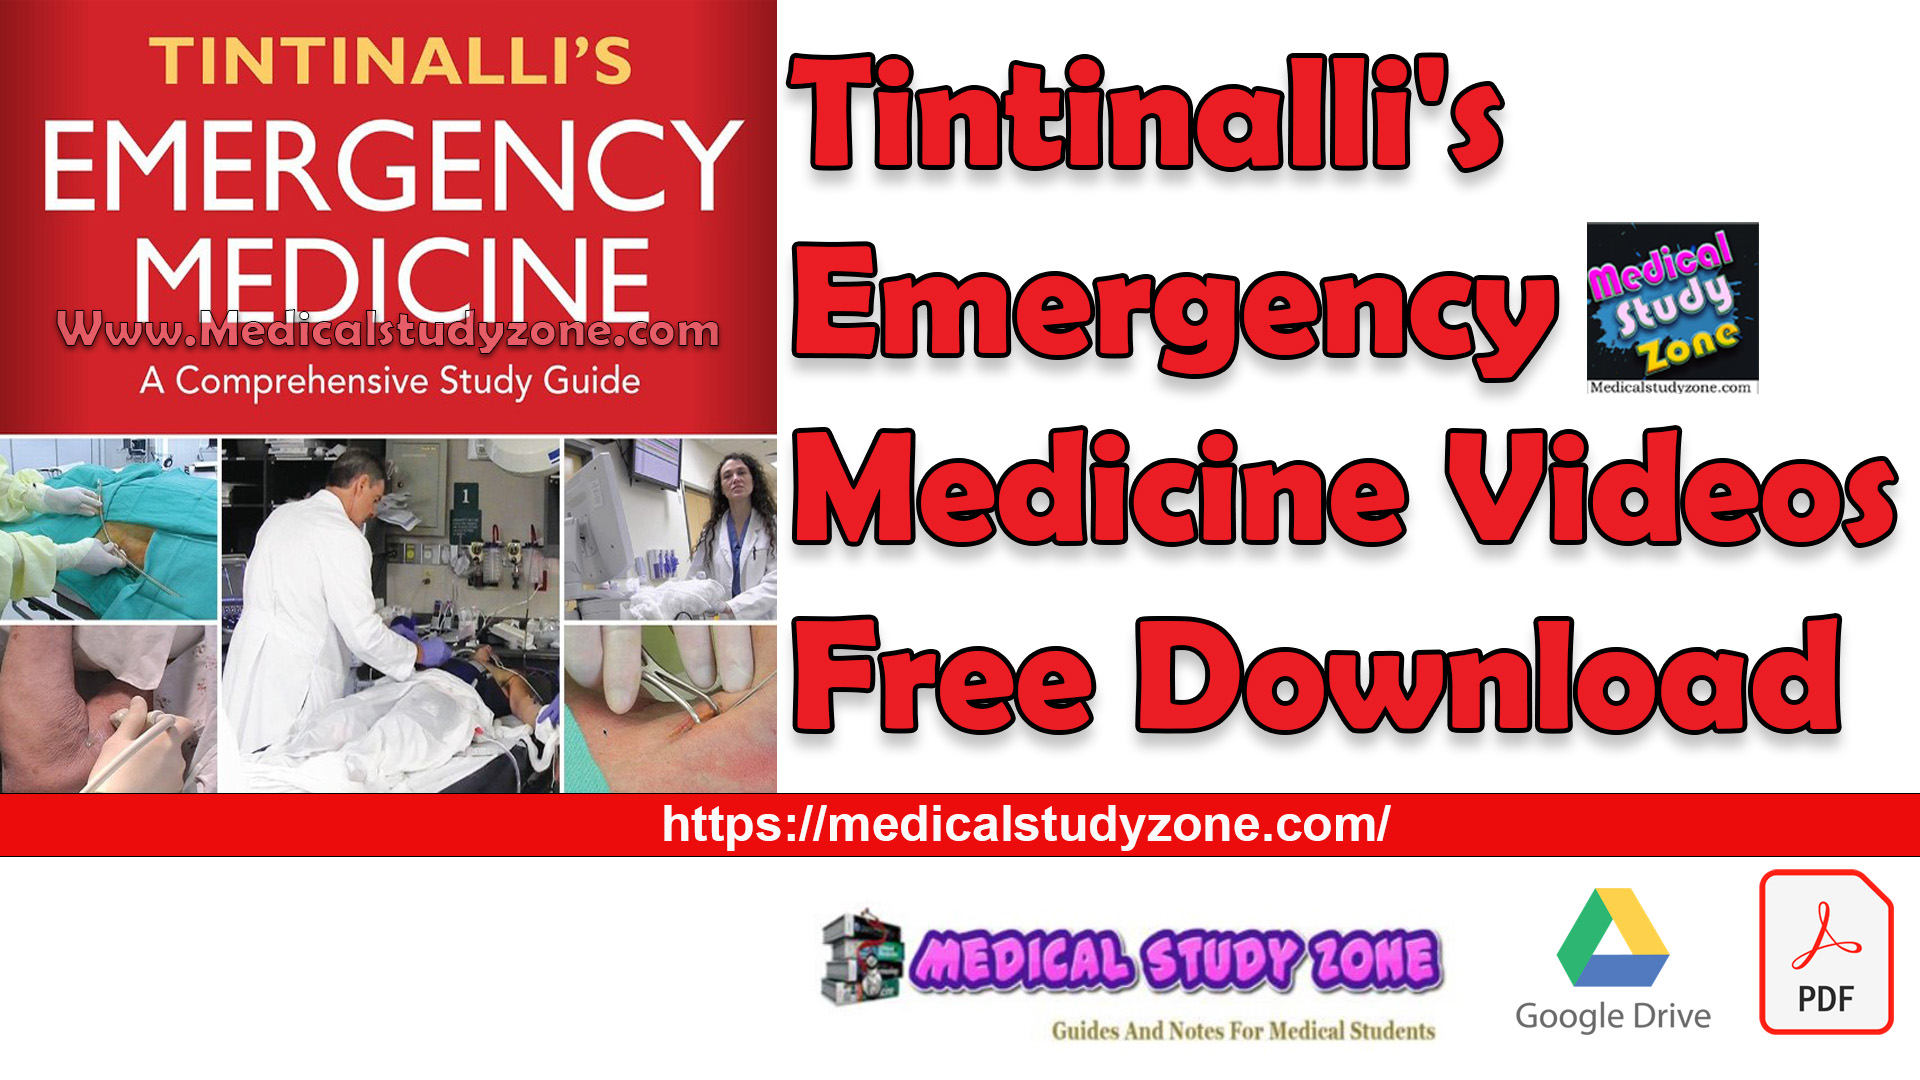 Tintinalli's Emergency Medicine Videos Free Download